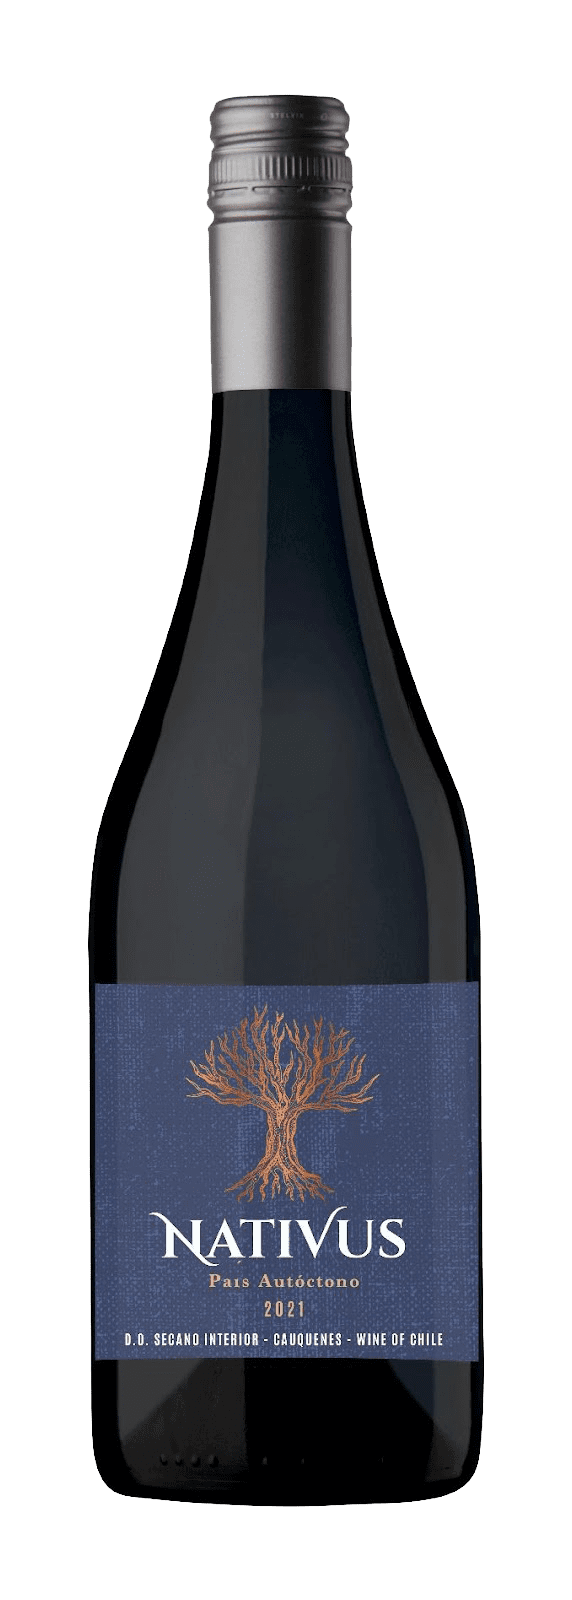 Nativus Pais Red Chileense wijn zomerwijn bbq